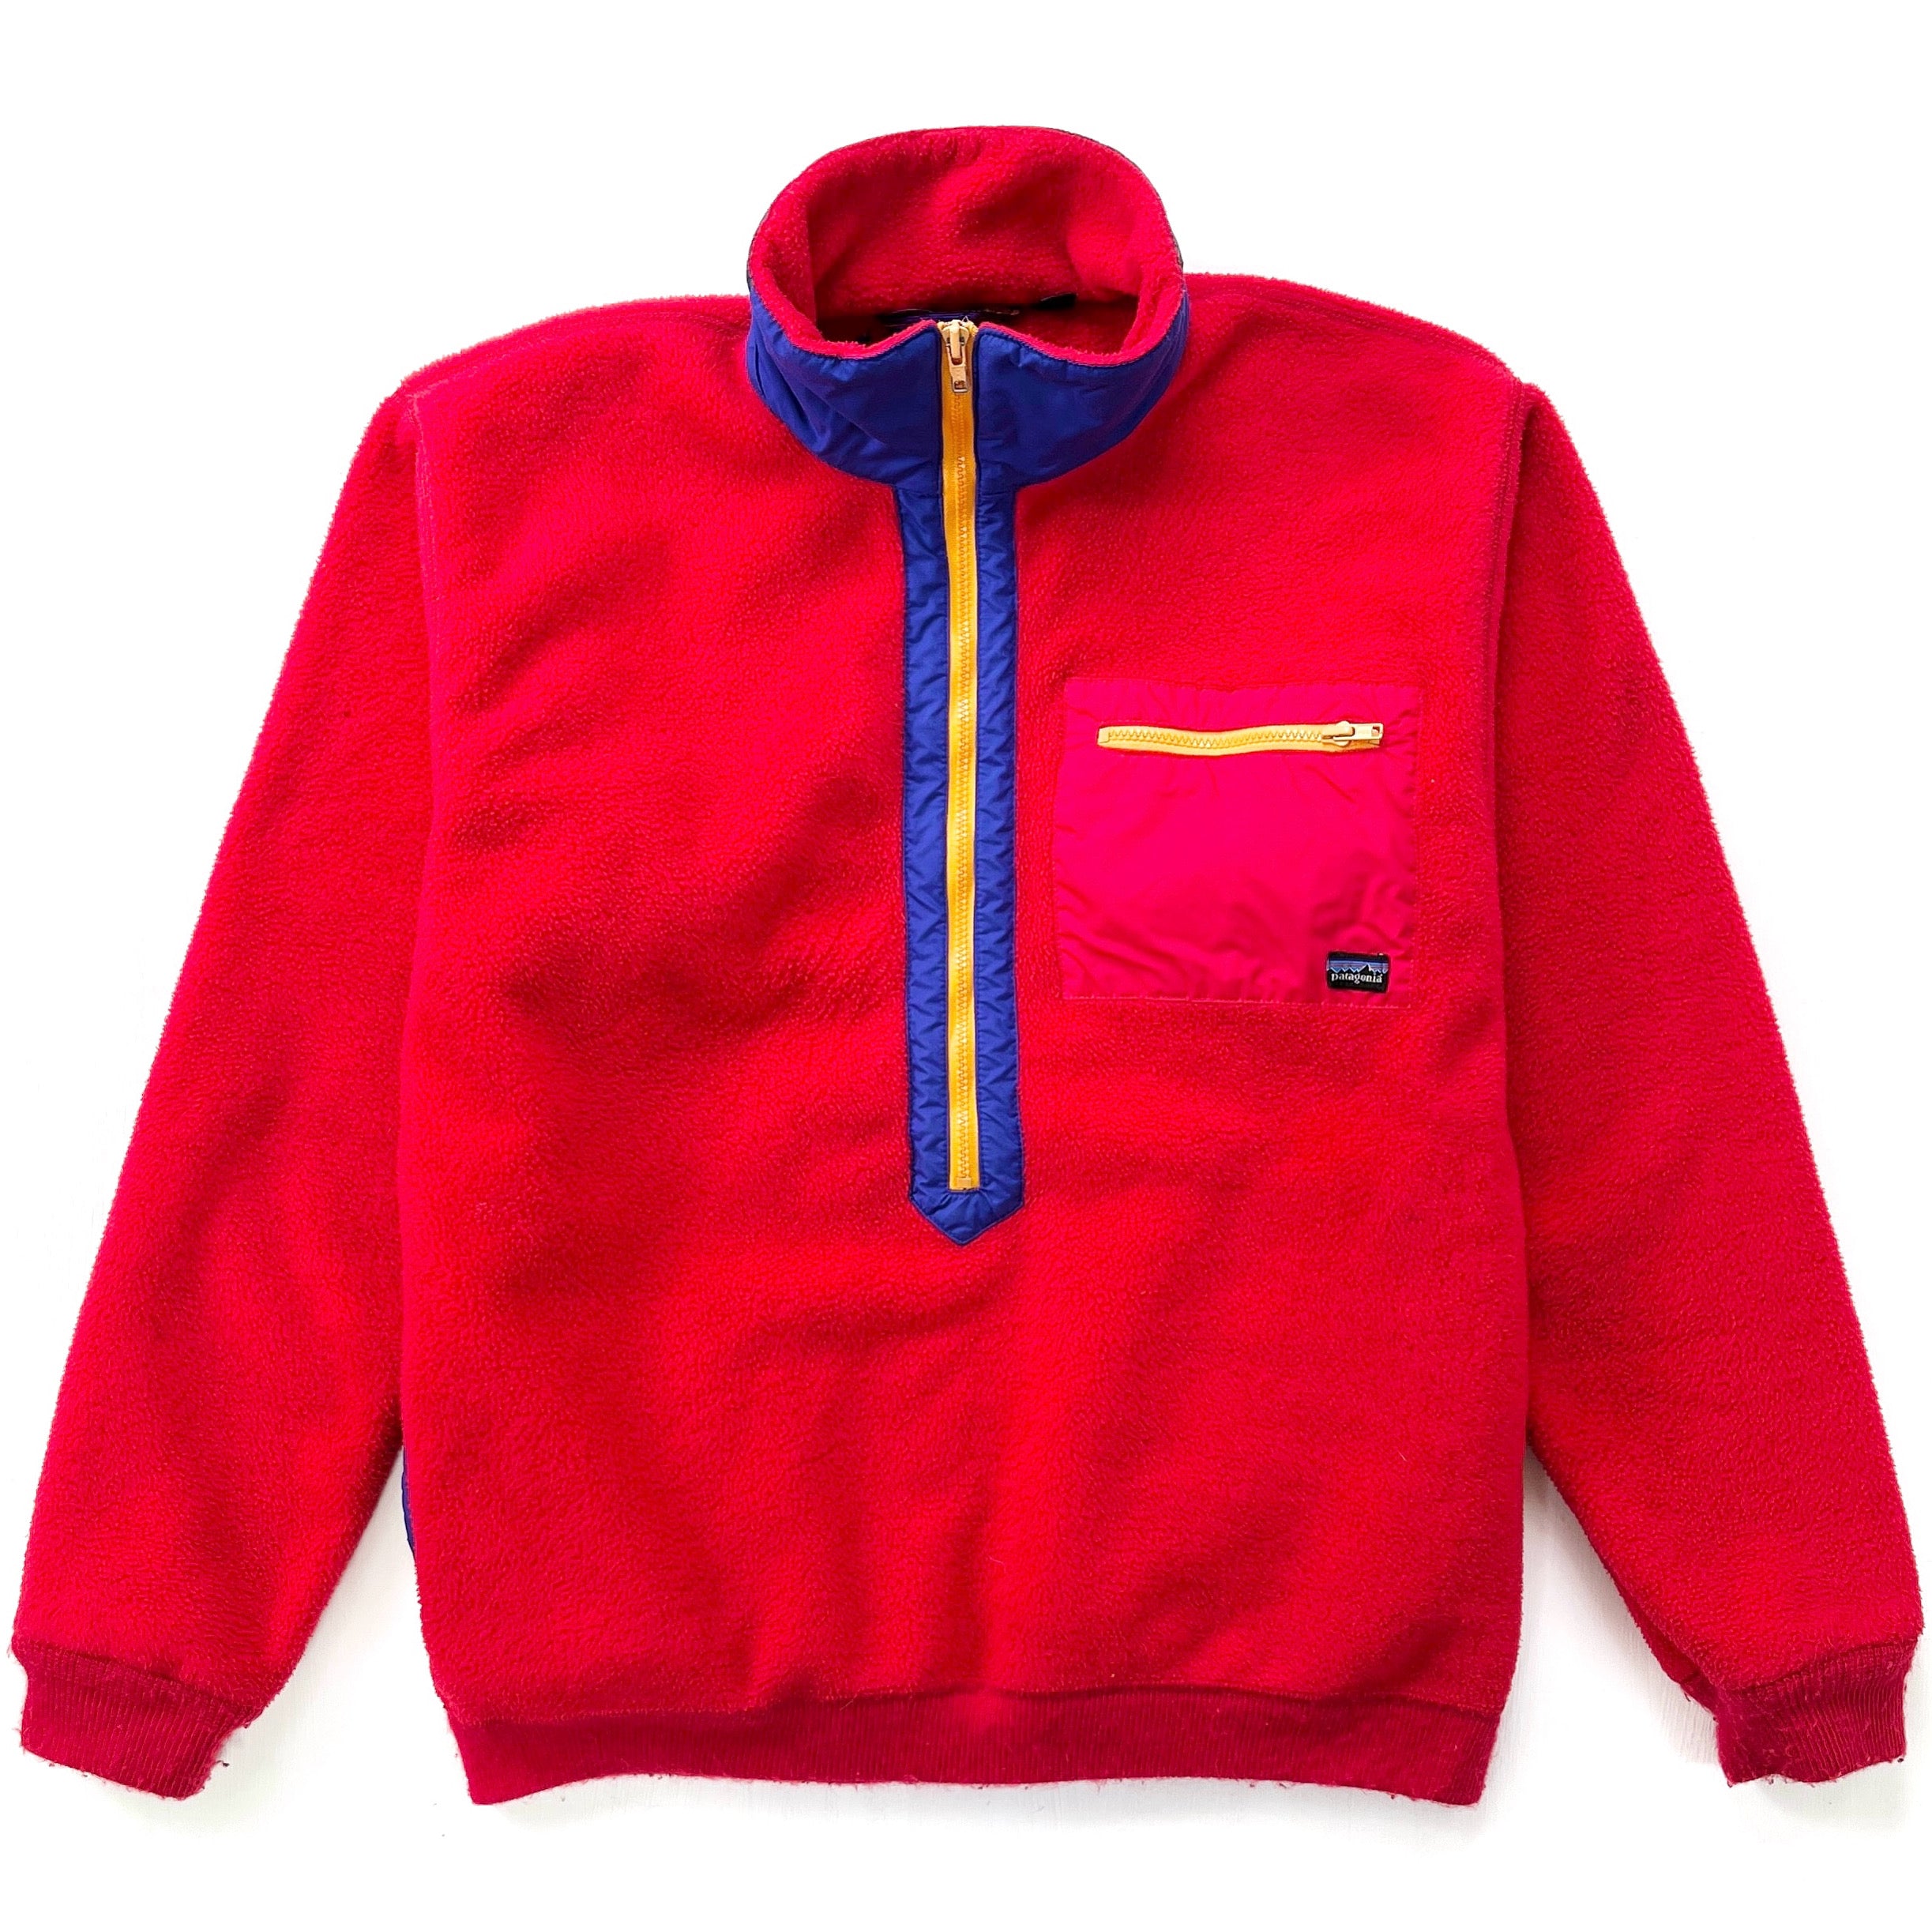 1988 Patagonia Synchilla Half-Zip Fleece Sweater, Red & Cobalt (M)